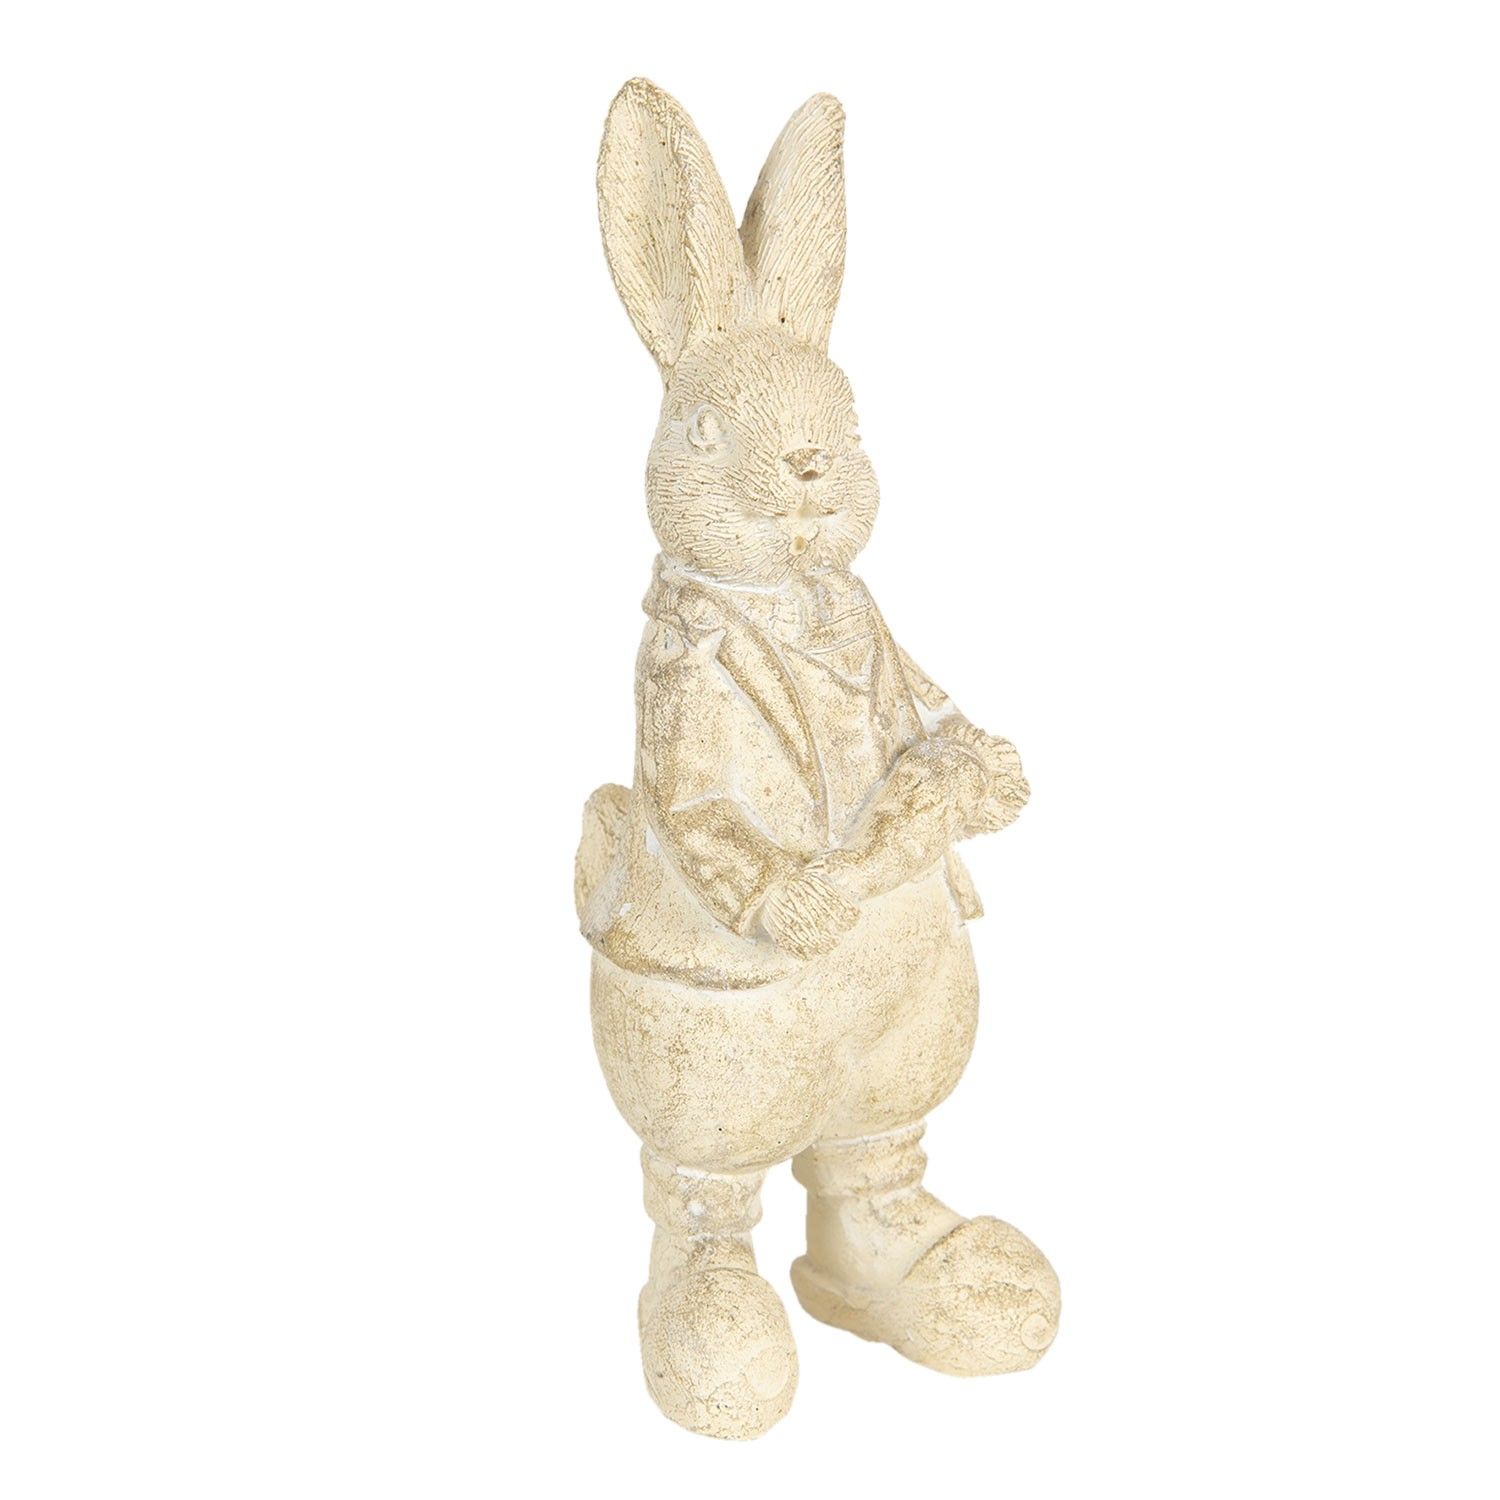 Velikonoční dekorace krémového králíka Métallique - 6*6*13 cm Clayre & Eef - LaHome - vintage dekorace